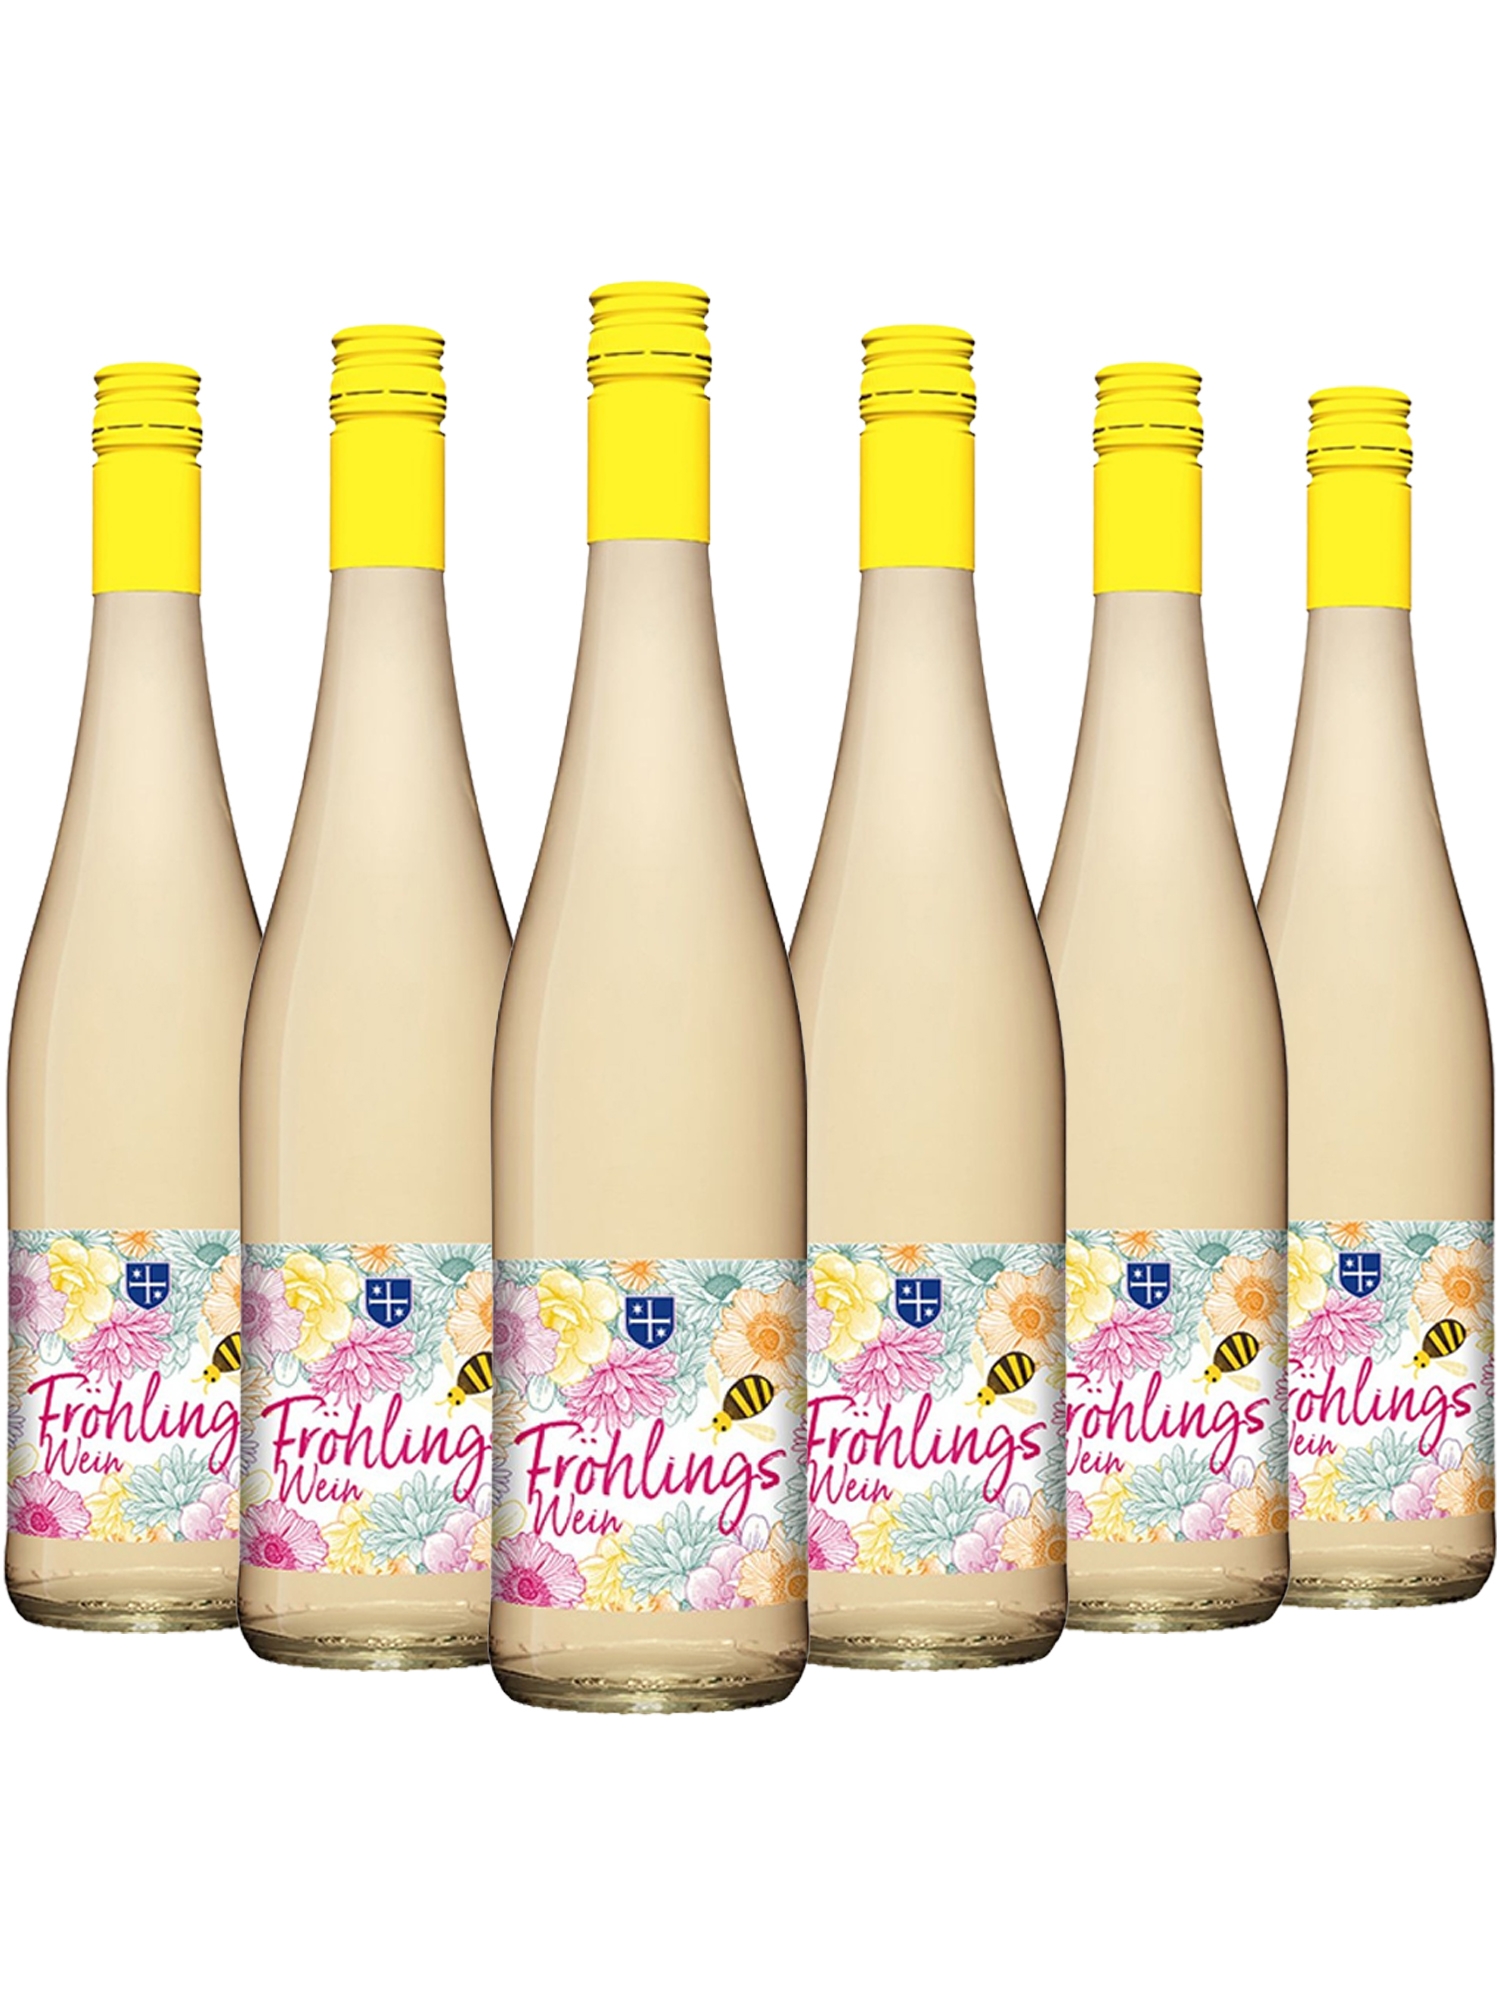 FröhlingsWein Weißweincuvée trocken - Winzerverein Deidesheim -